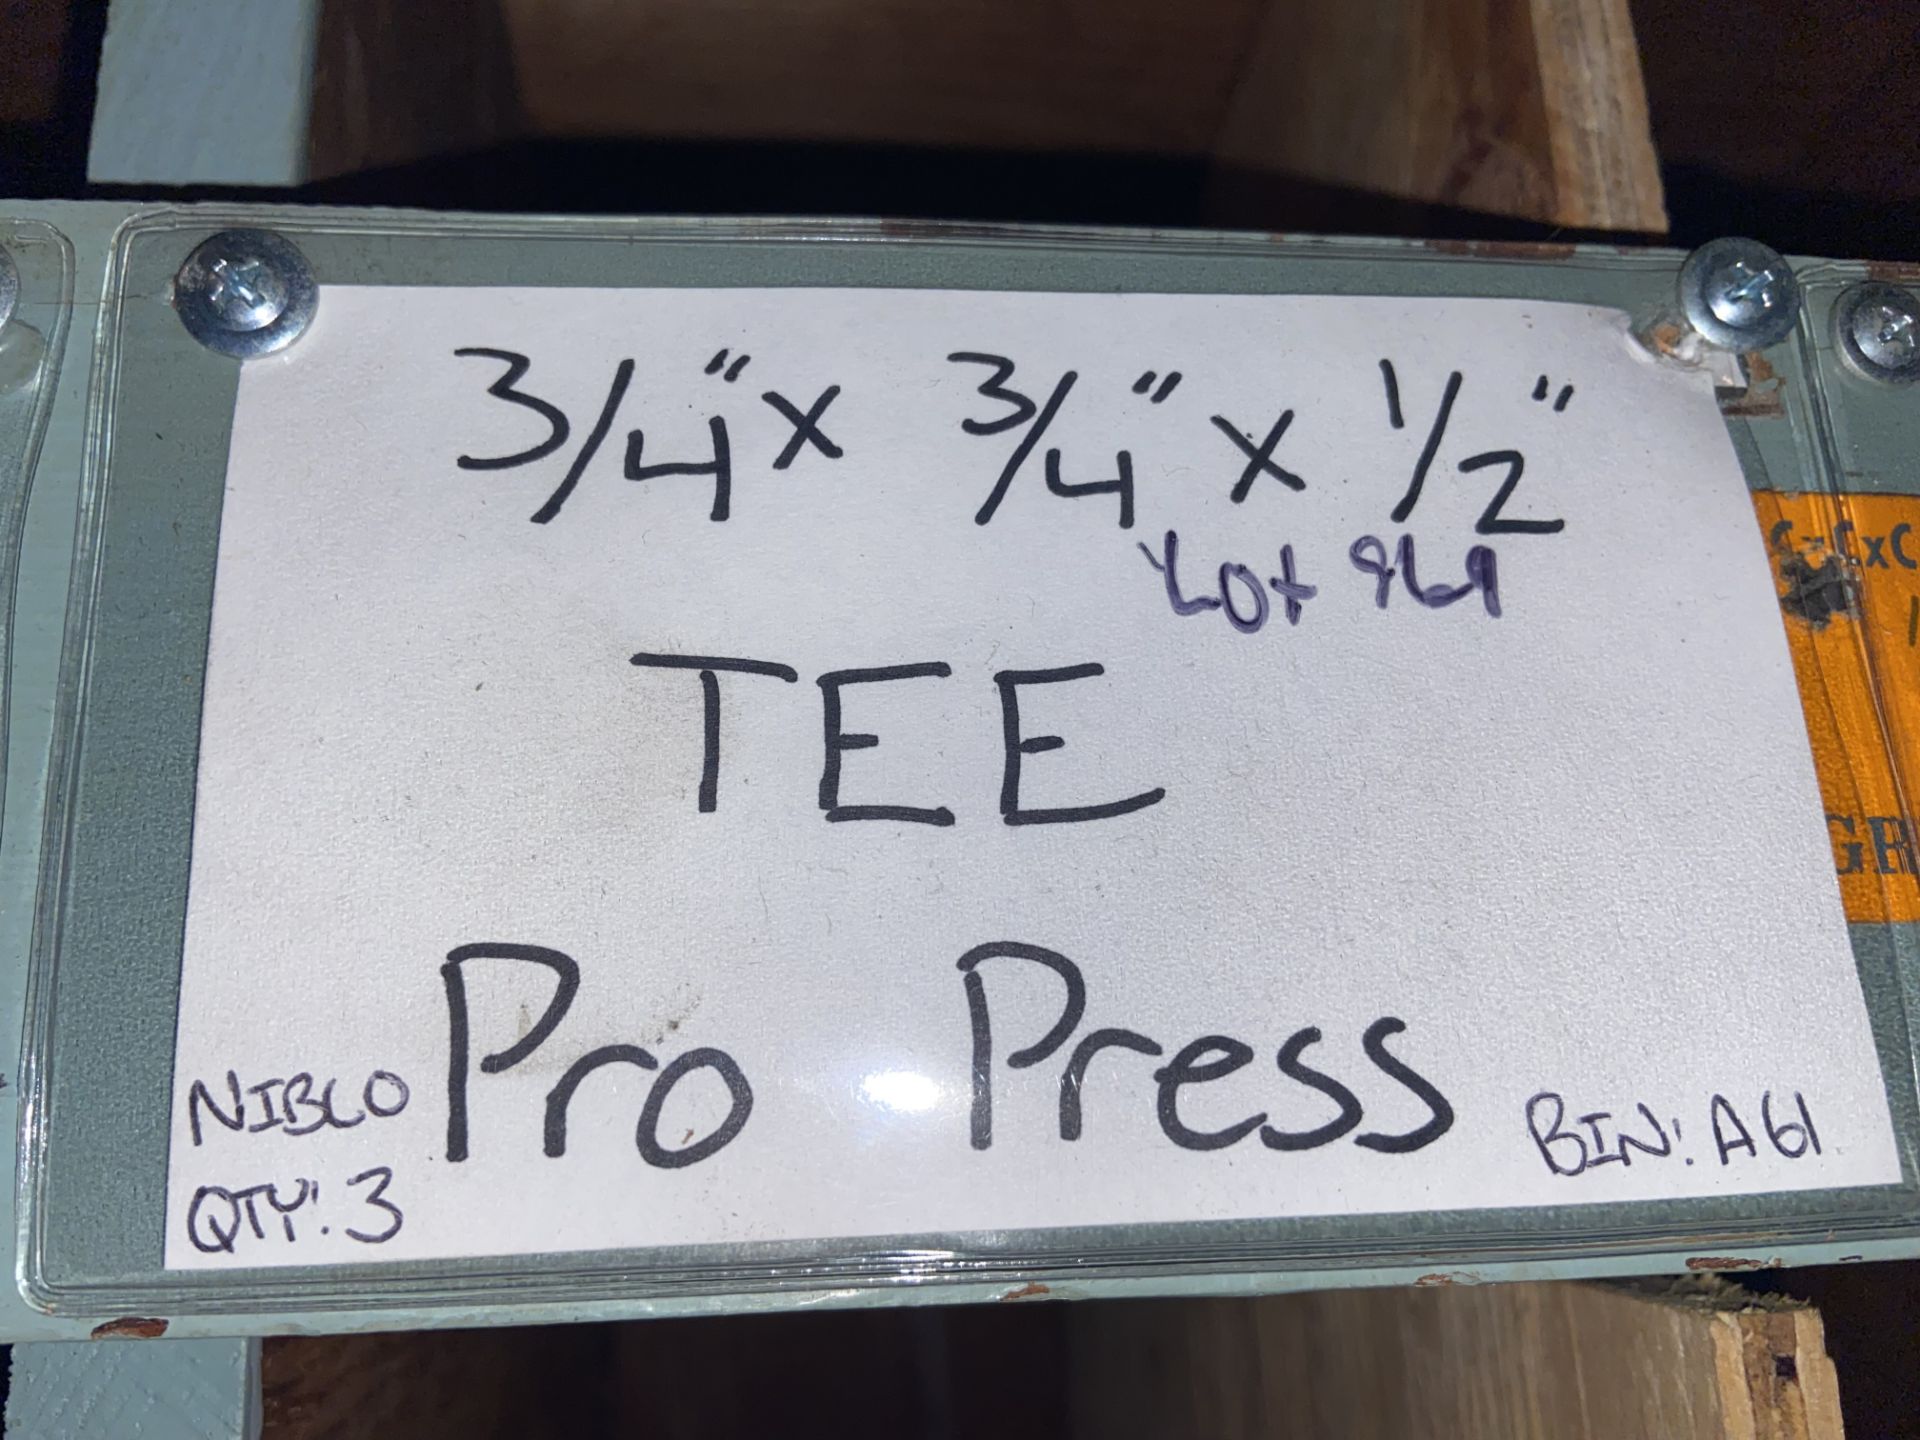 (1) VIEGA 2”x1 1/2” x 1 1/4” Tee Pro Press; (2) NIBCO 1 1/4” 1 1/4”x 1/2” Tee Pro Press; VIEGA (1) - Image 20 of 33